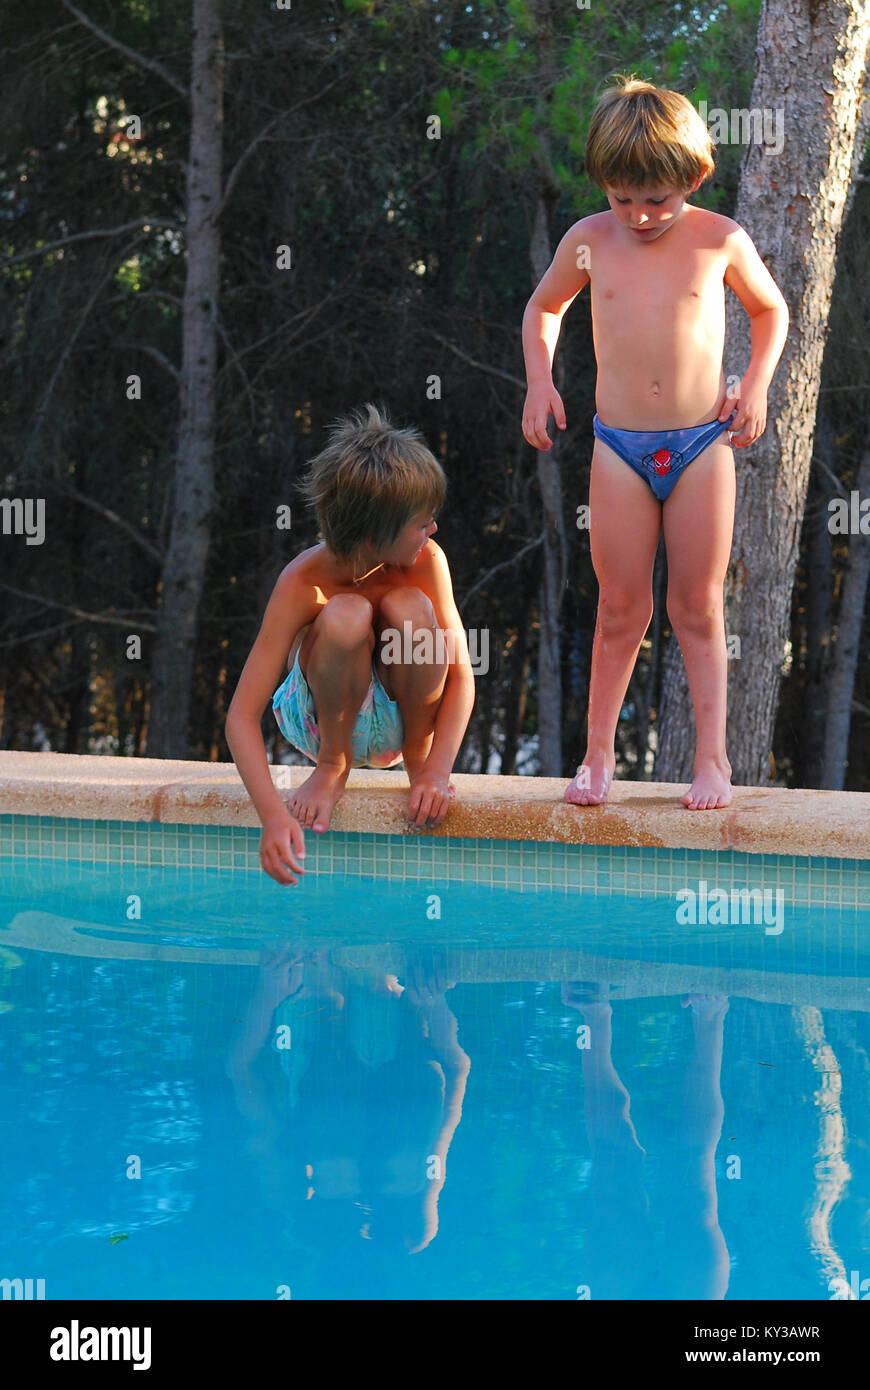 naked pool alamy stock photo